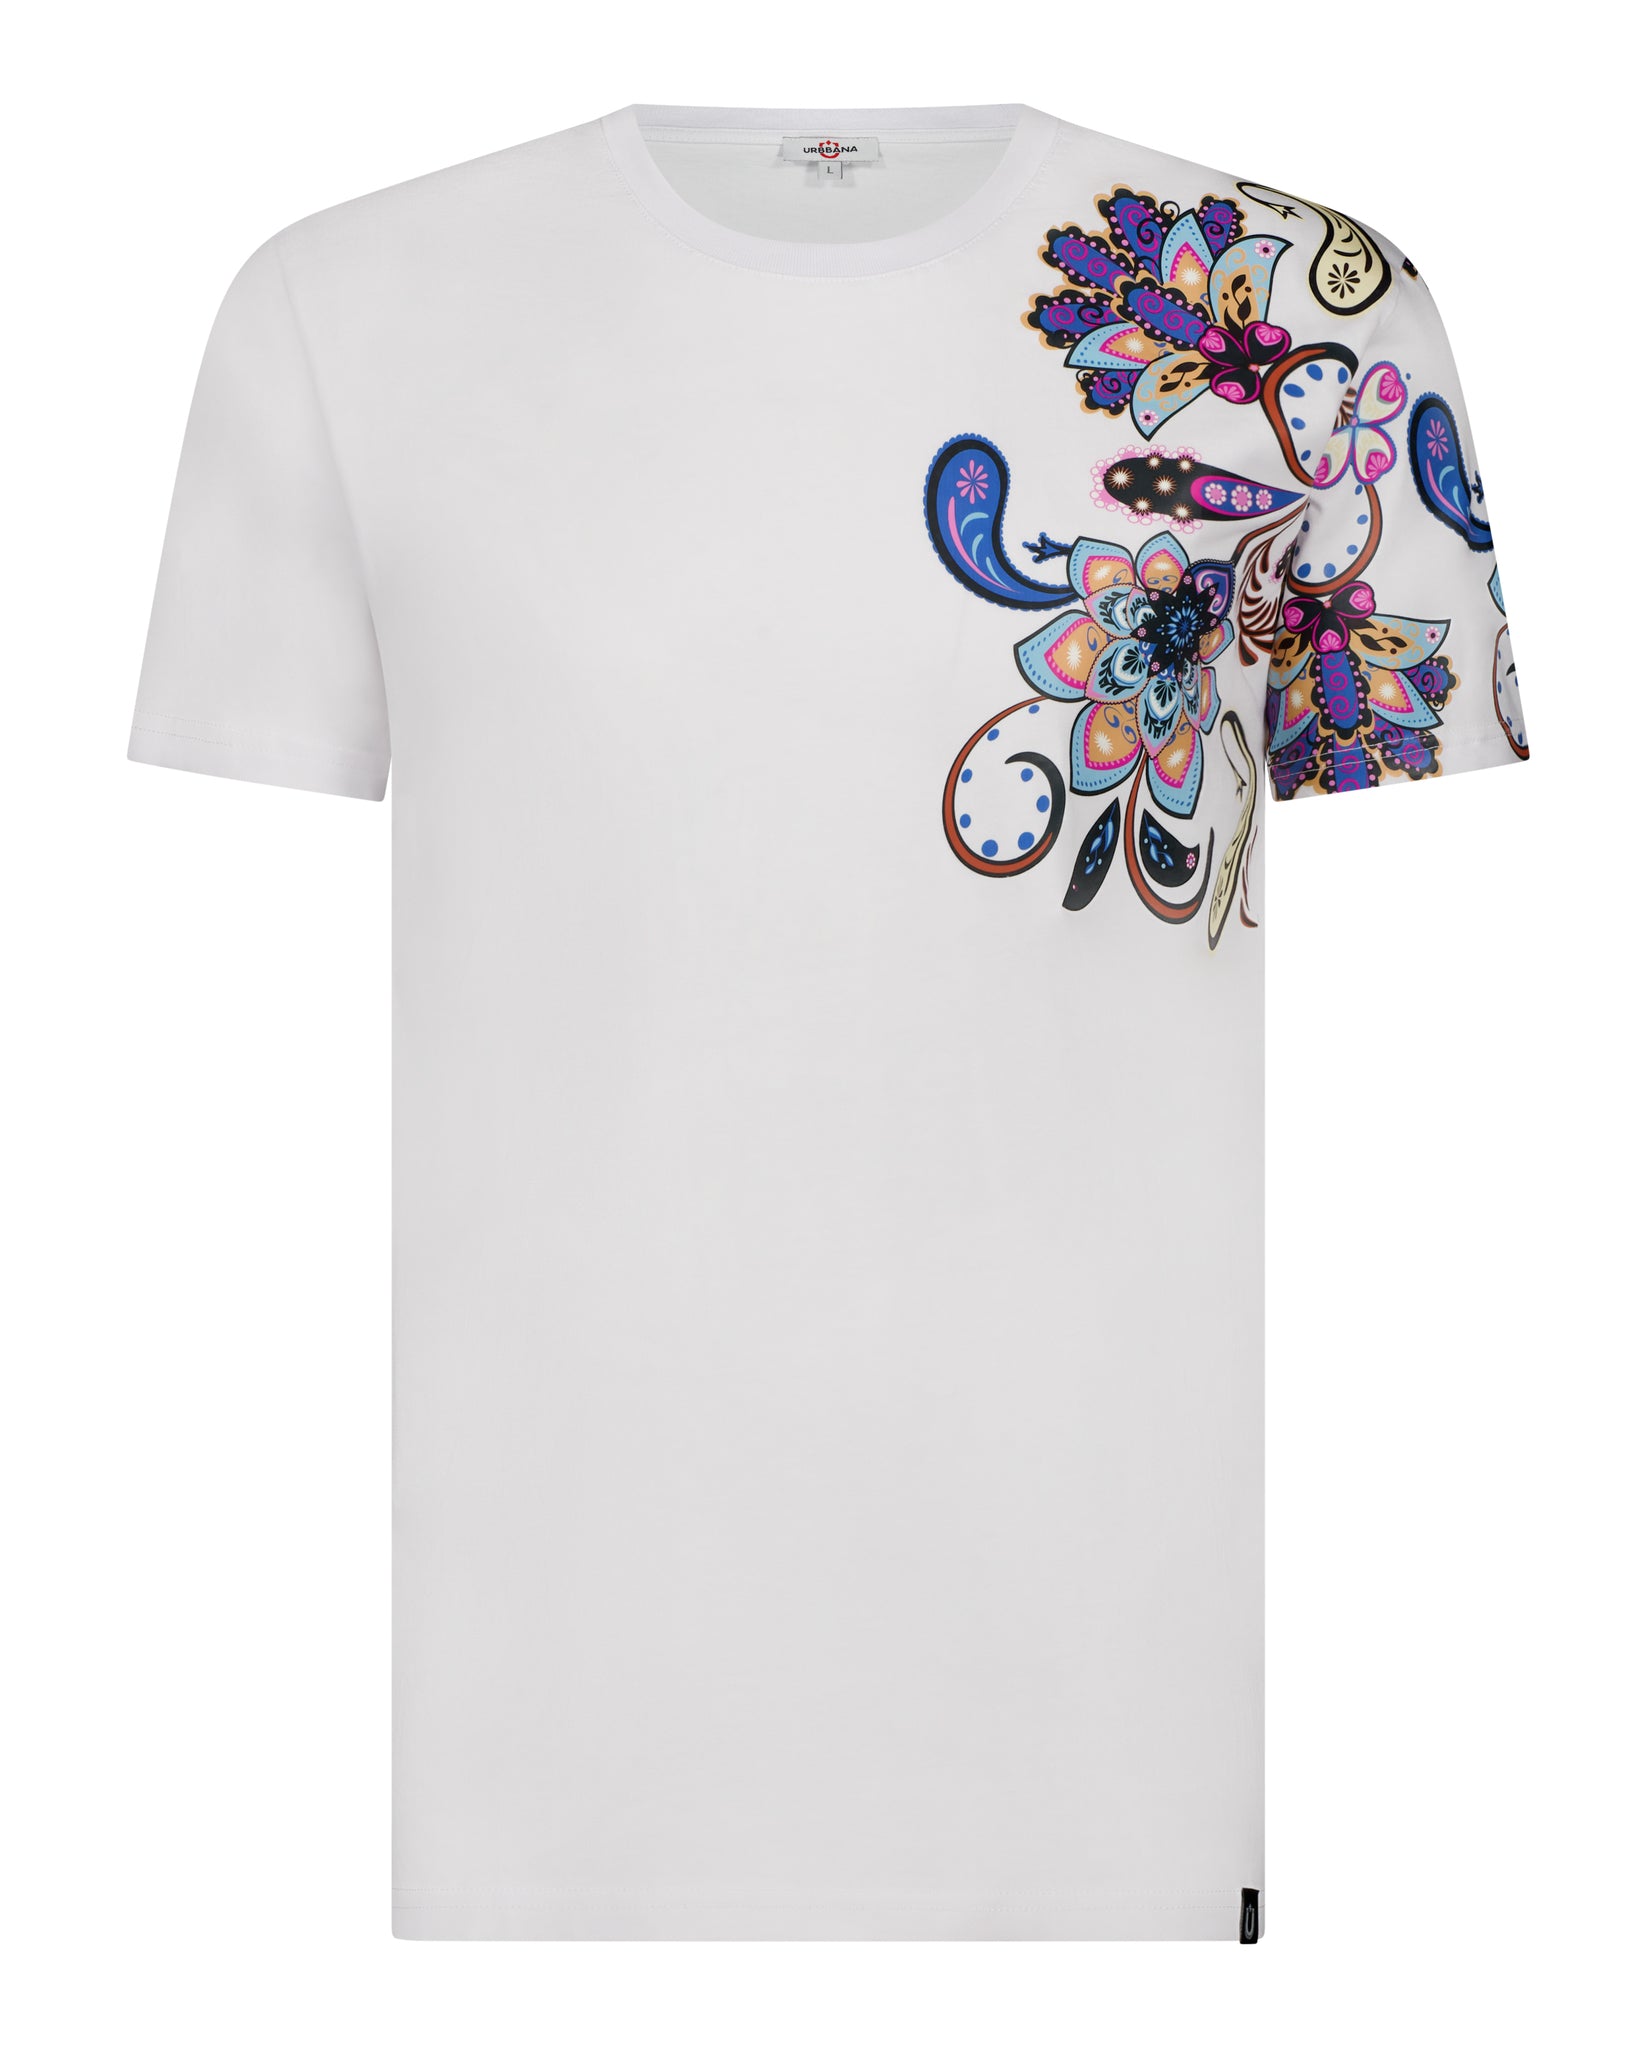 Fine Cotton T-shirt with Shoulder Paisley Print - White